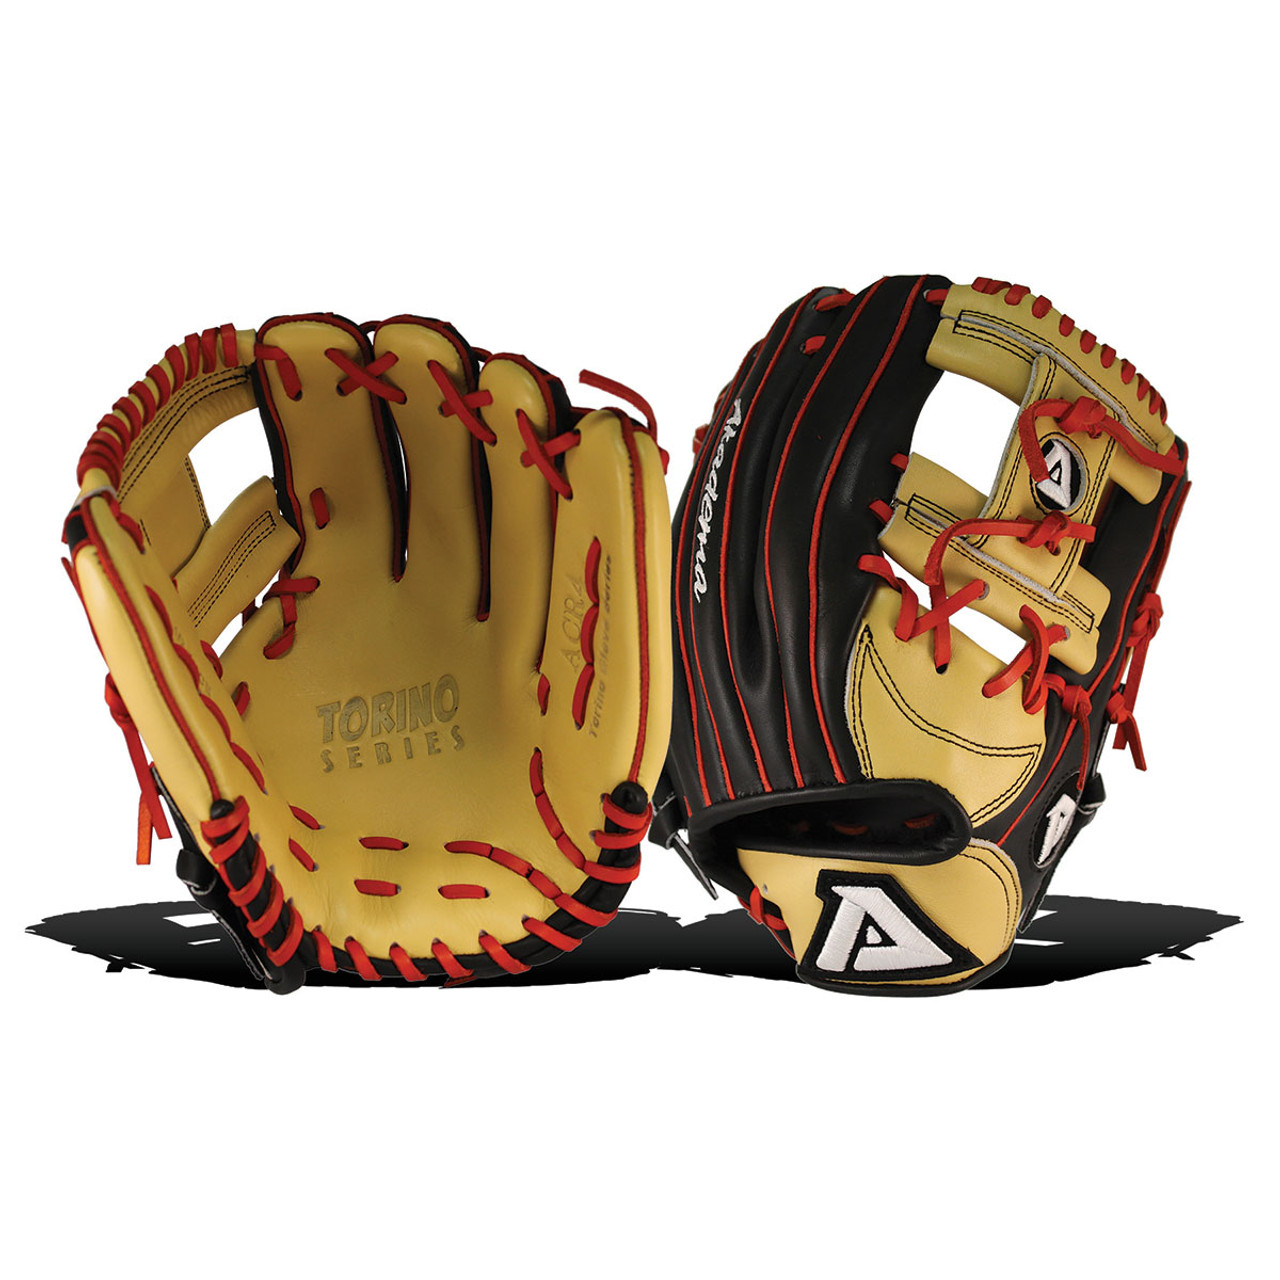 cool baseball glove designs